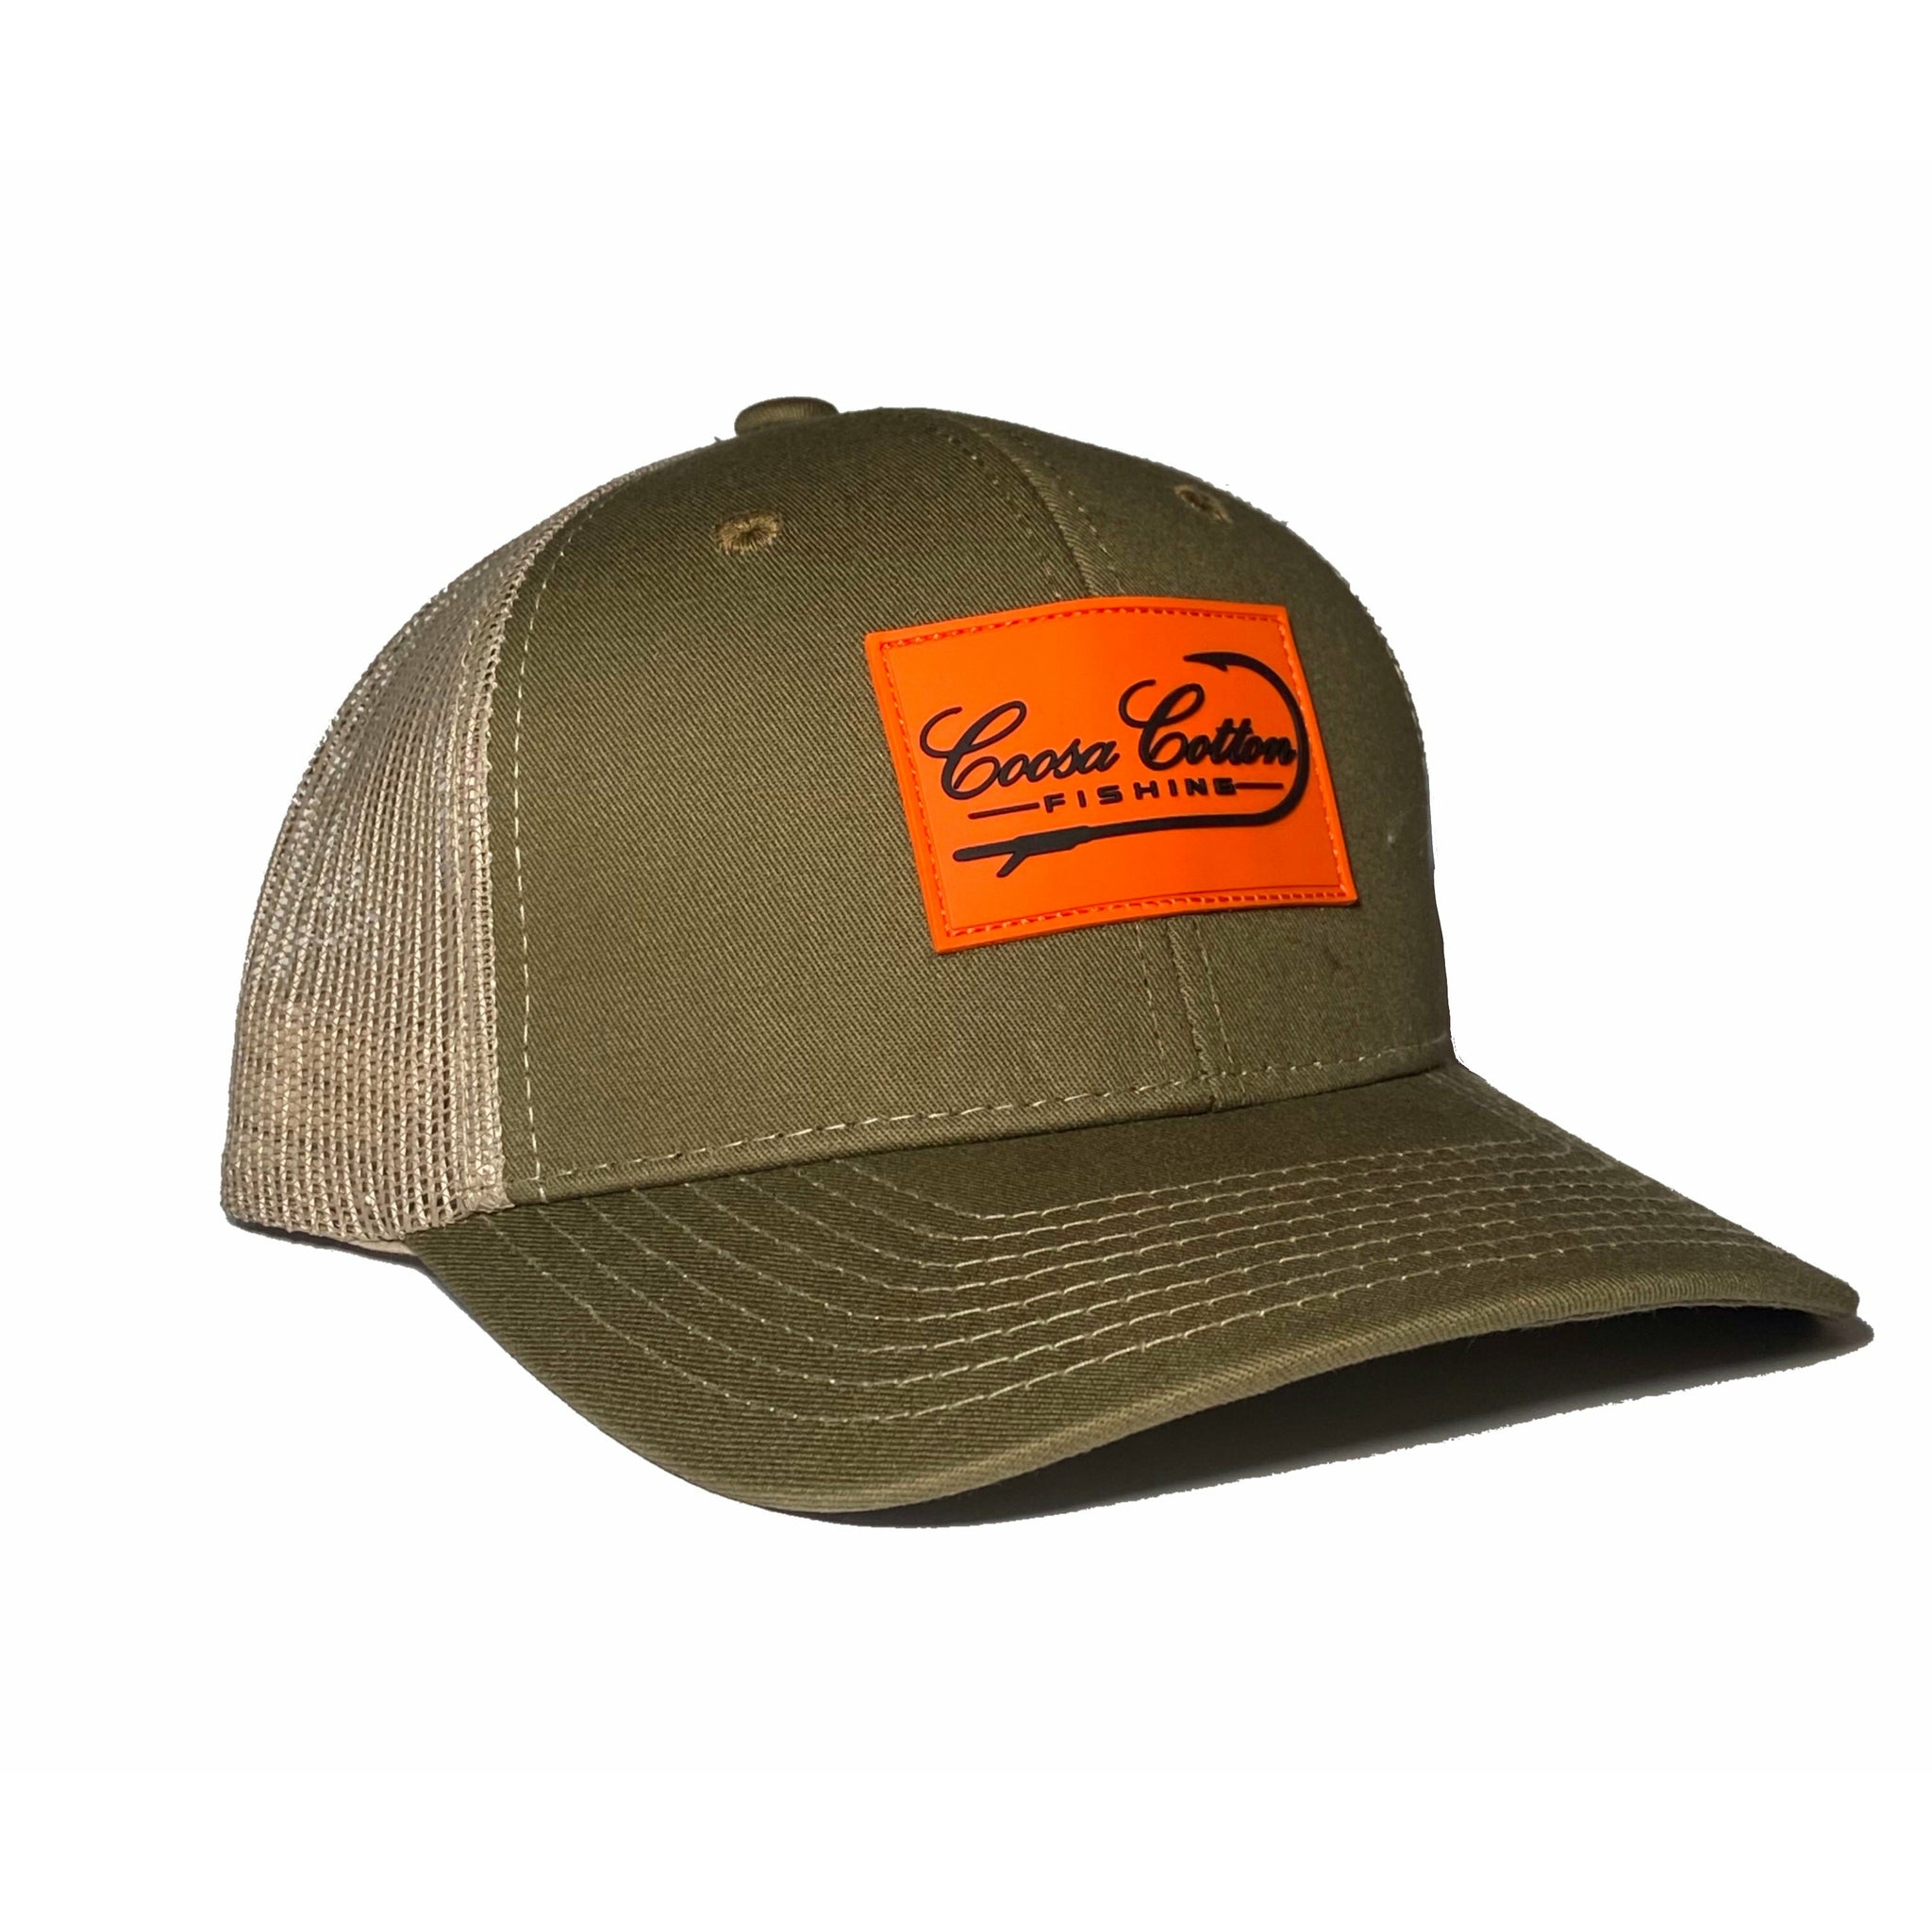 Trucker Hat - "Choccolocco Creek"  - Olive Green and Khaki